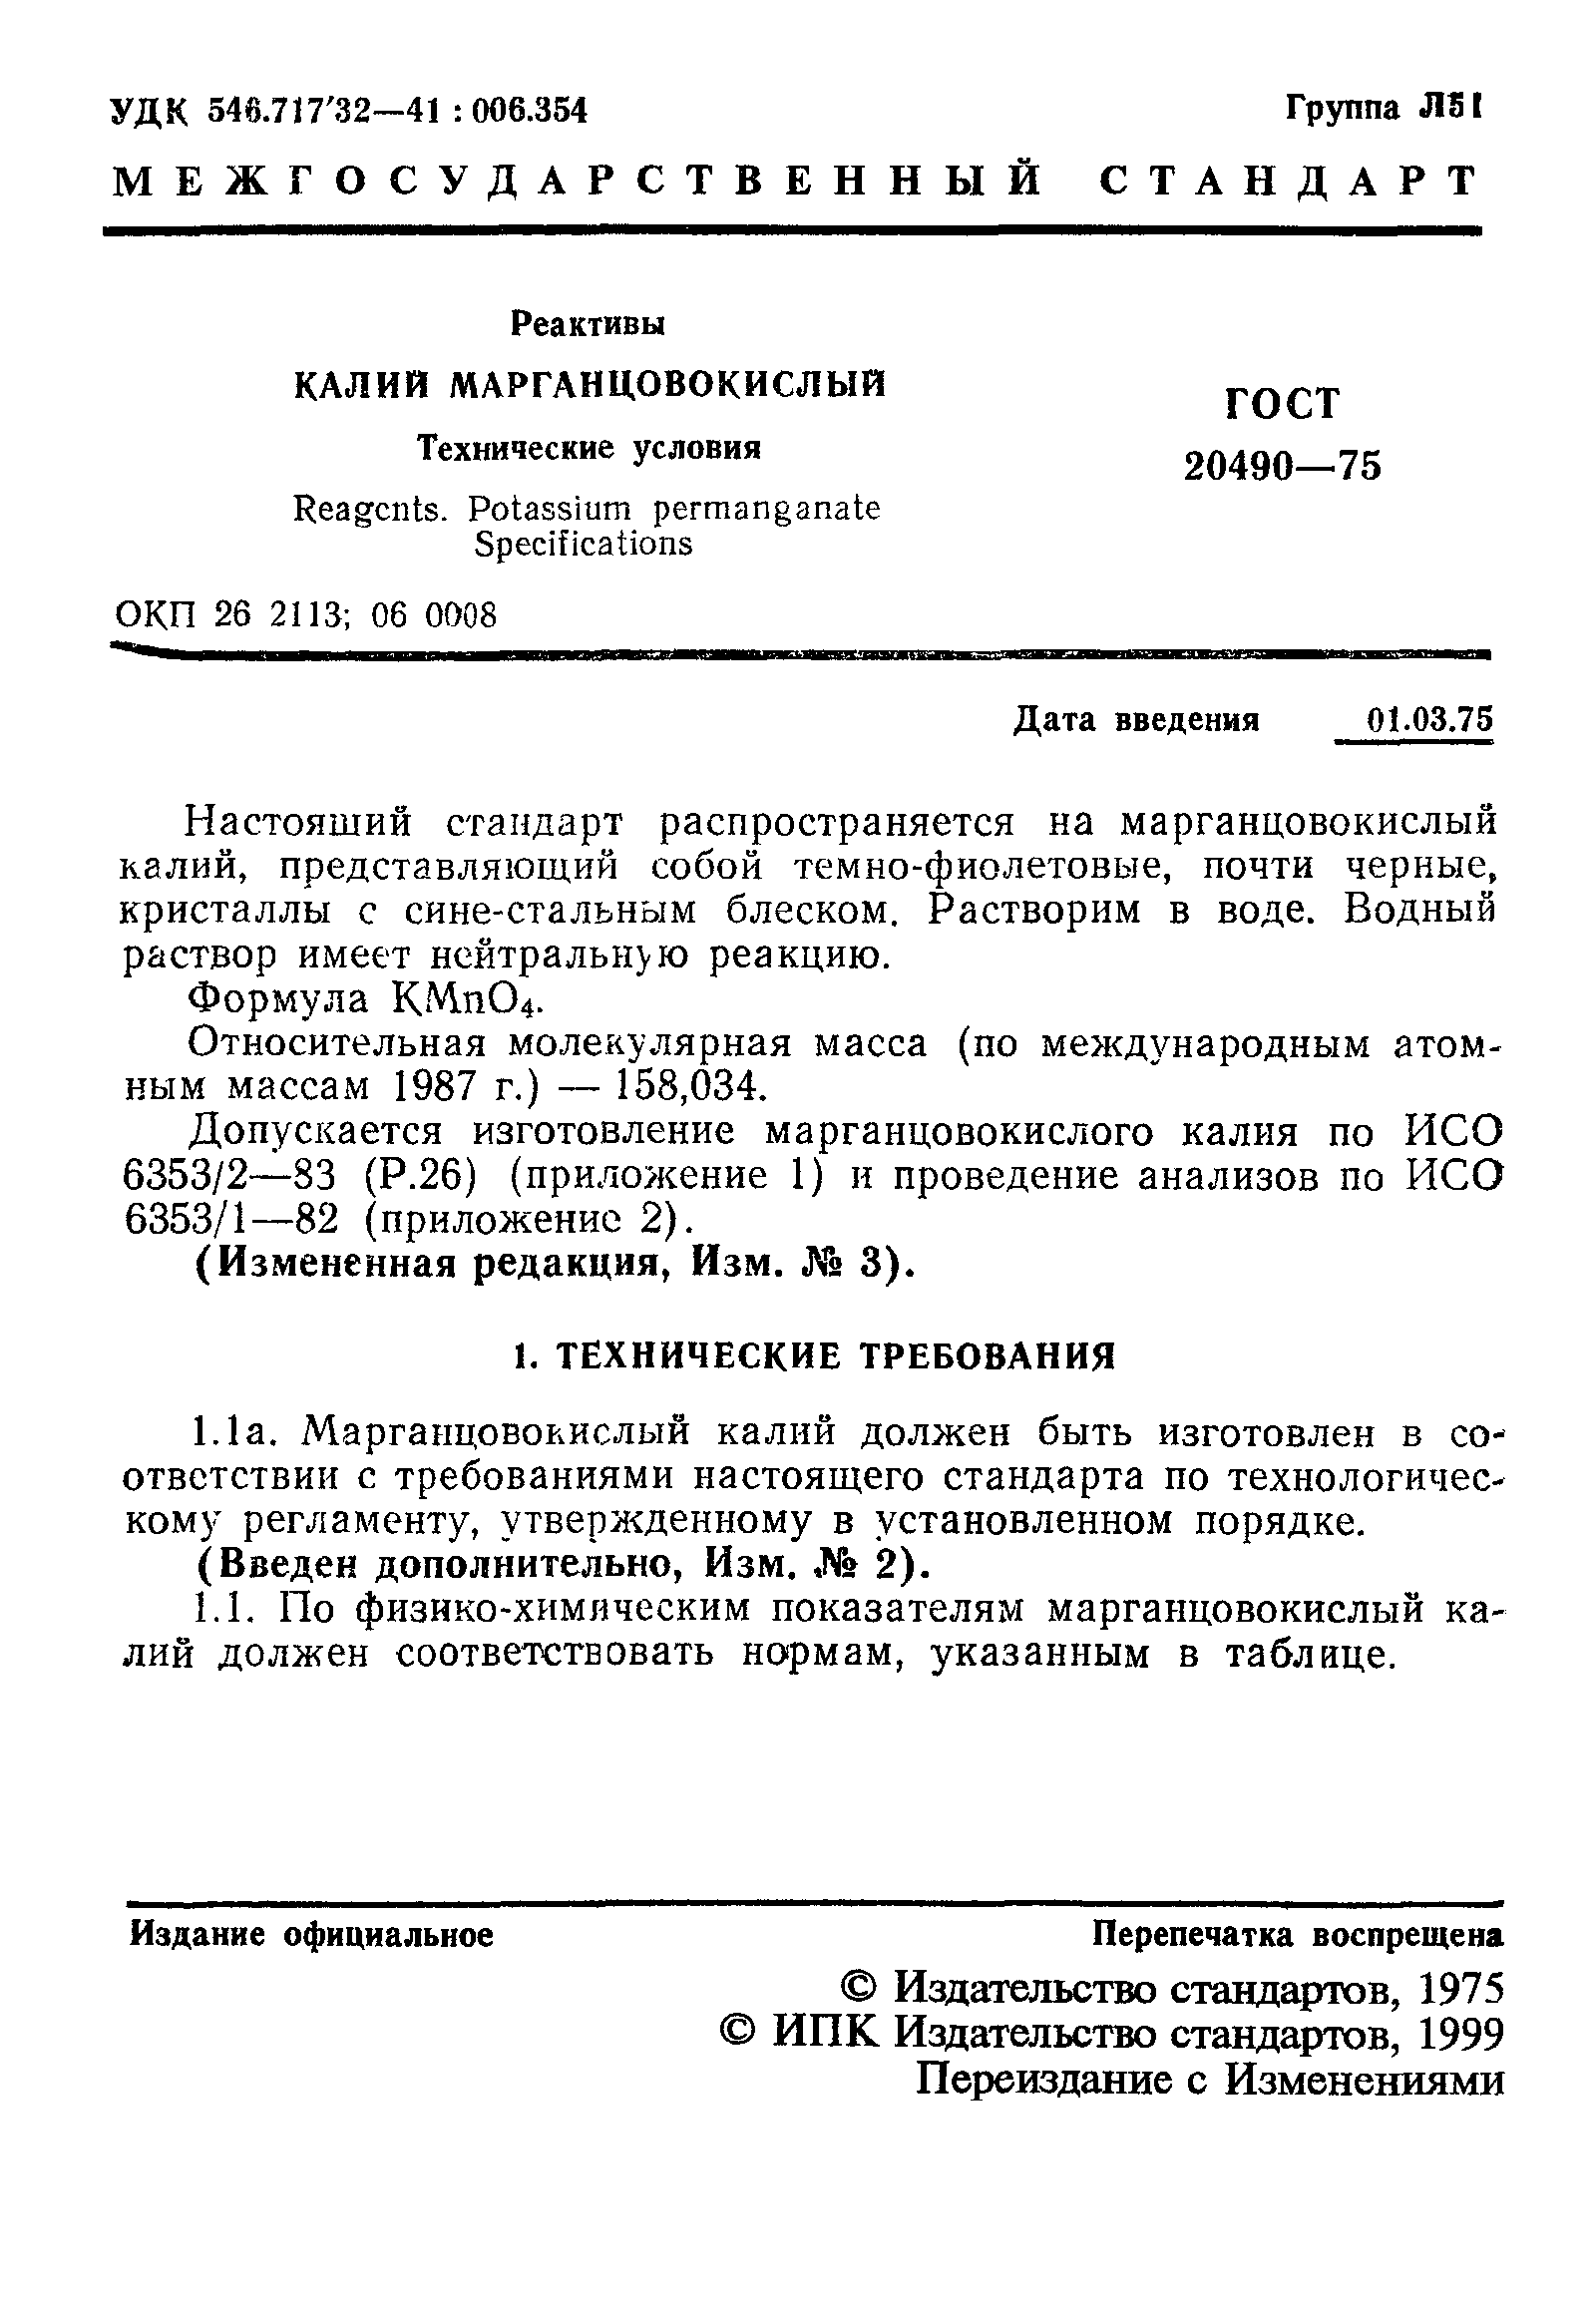 ГОСТ 20490-75